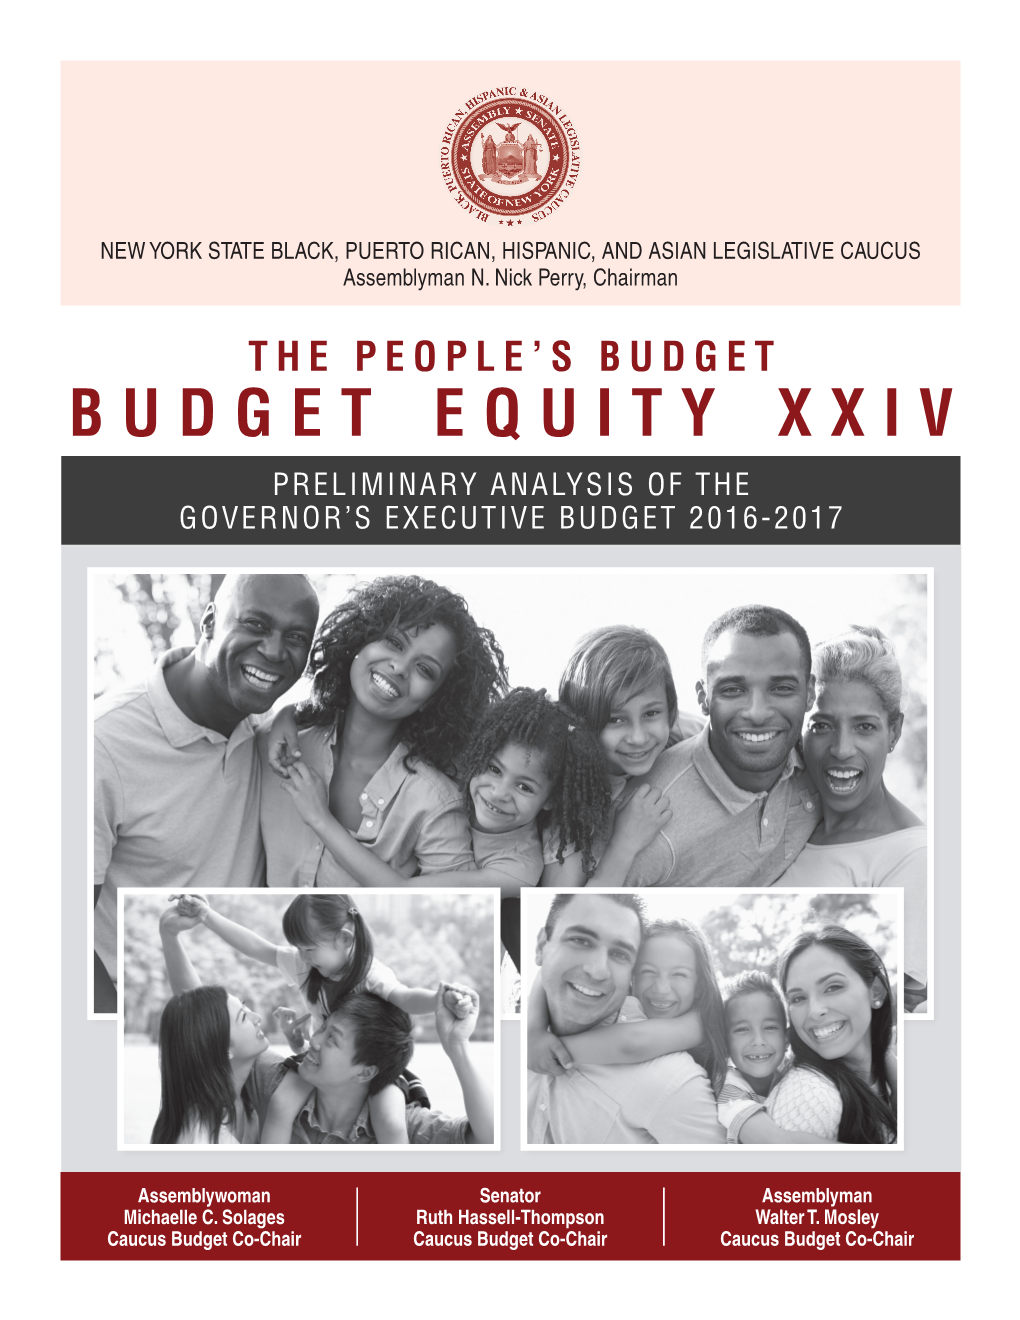 Budget Equity Xxiv Preliminary Analysis of the Governor’S Executive Budget 2016-2017